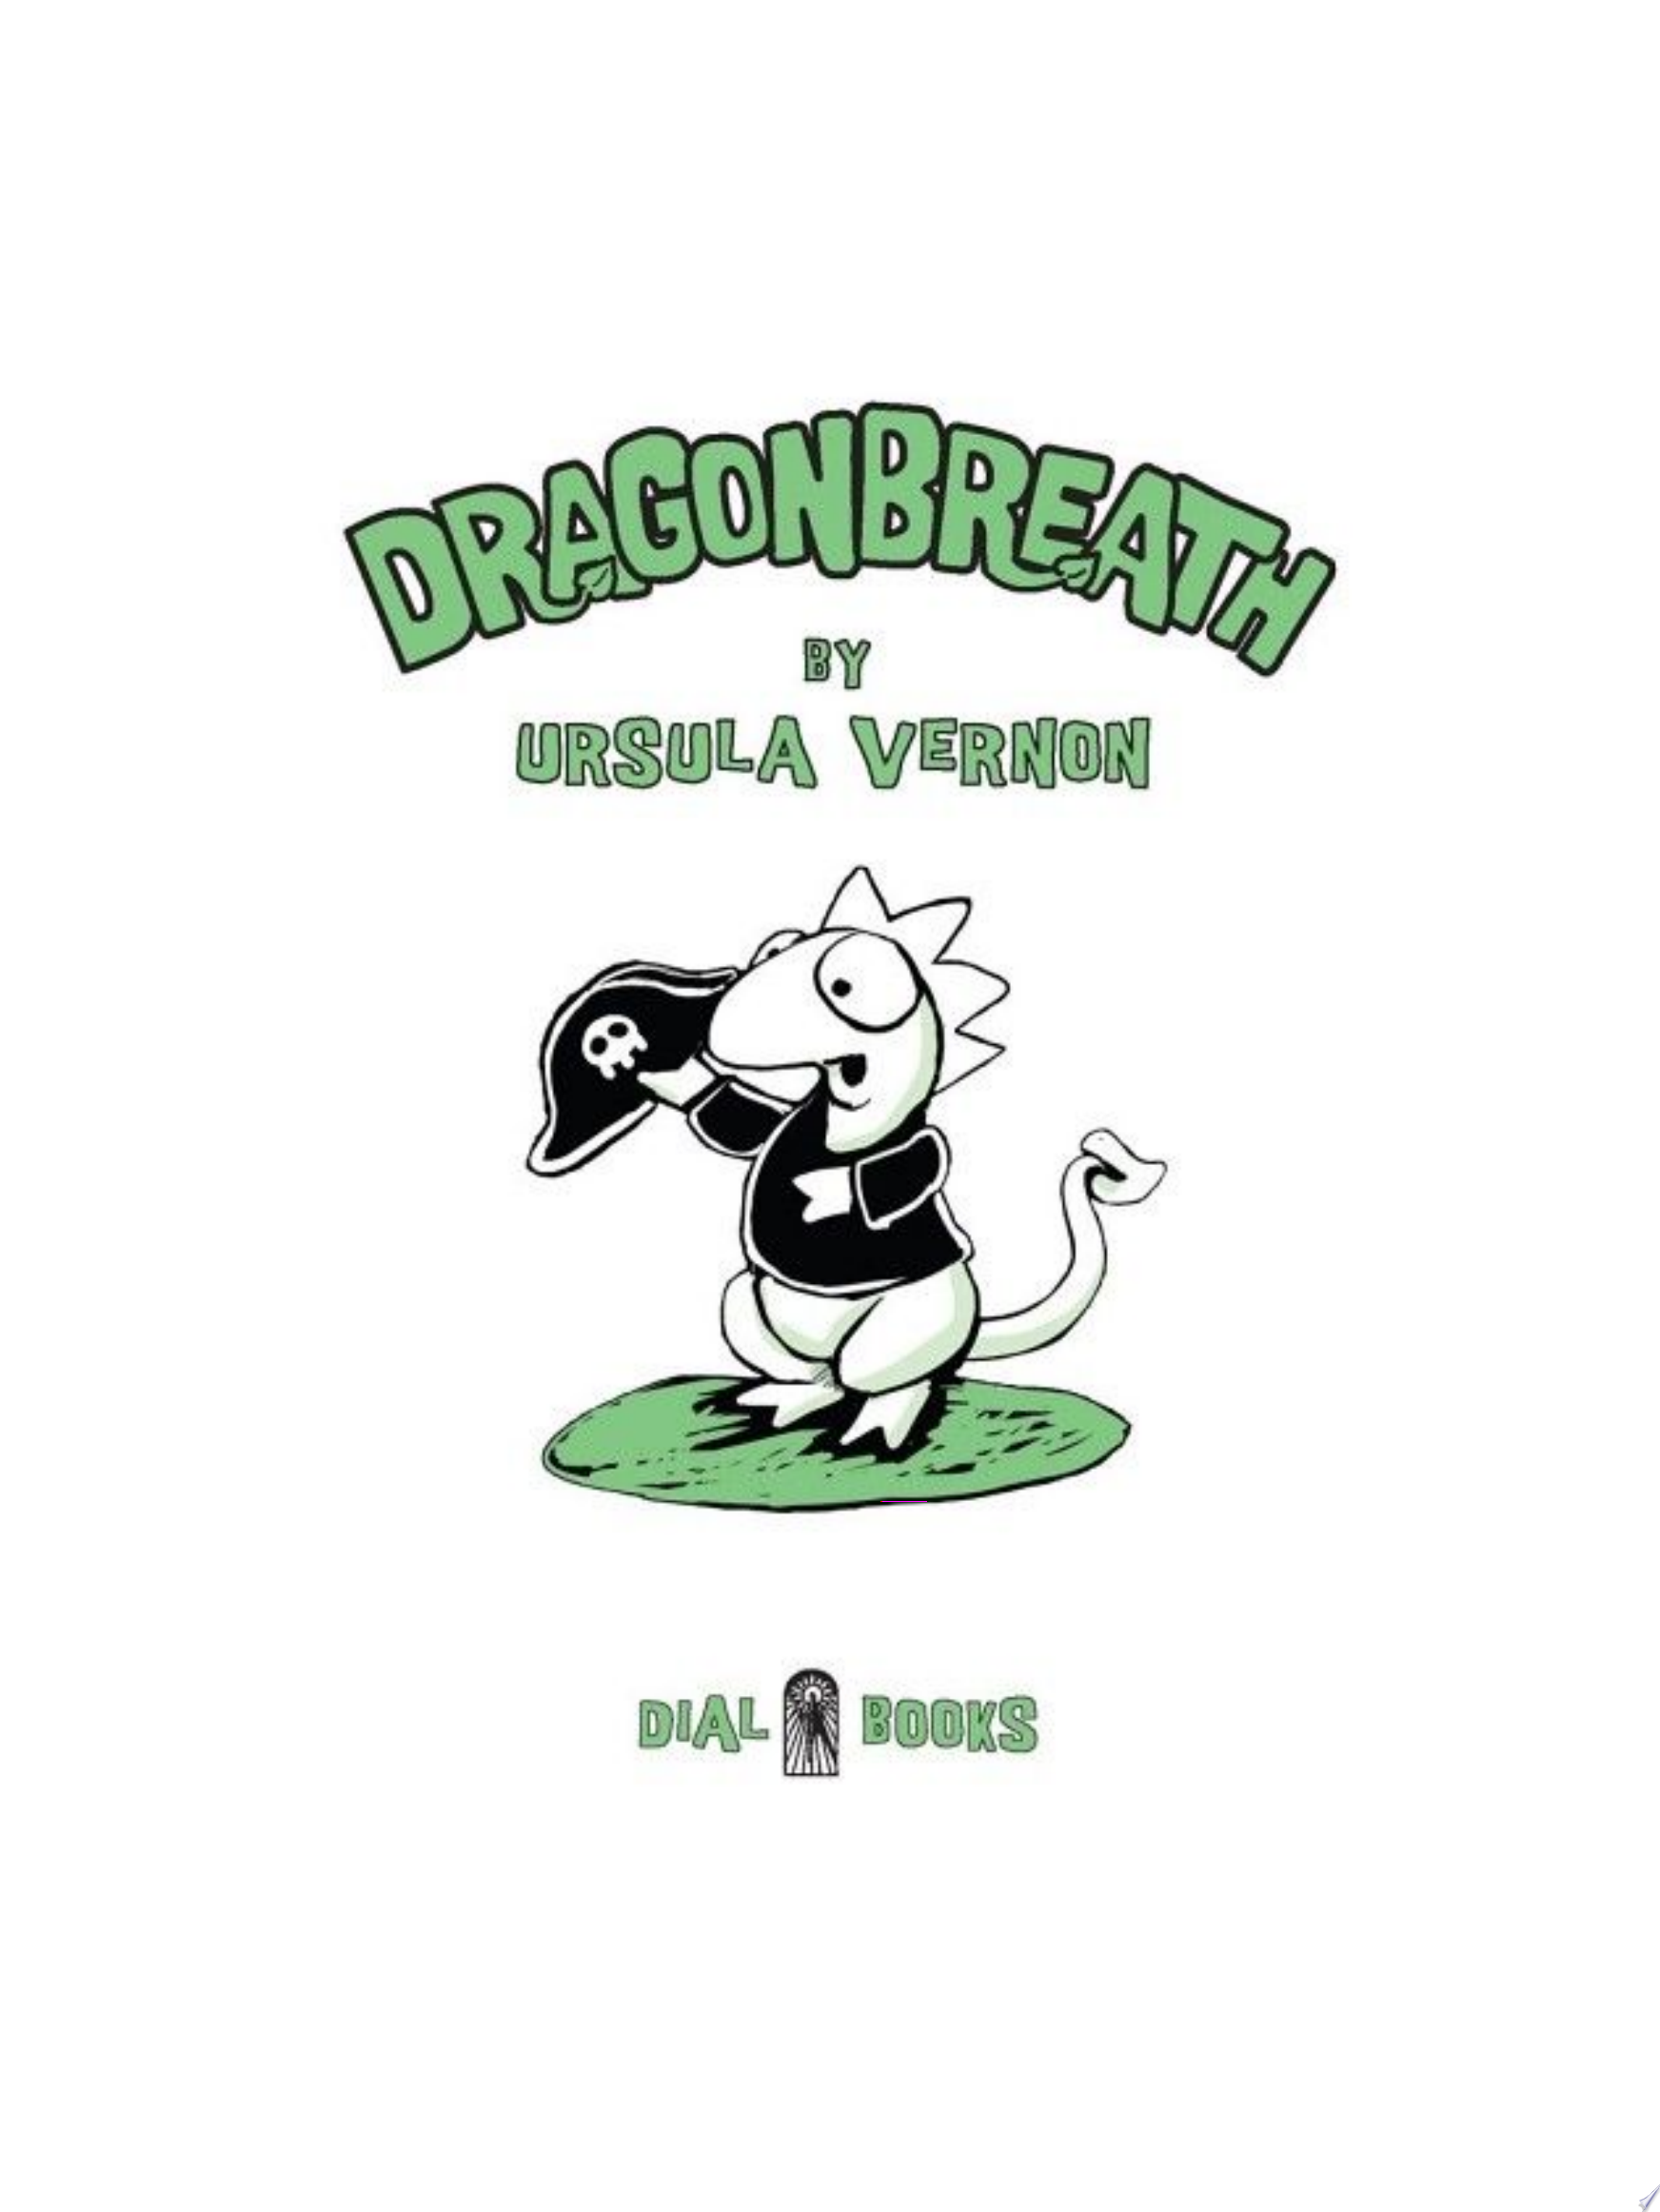 Image for "Dragonbreath #1"